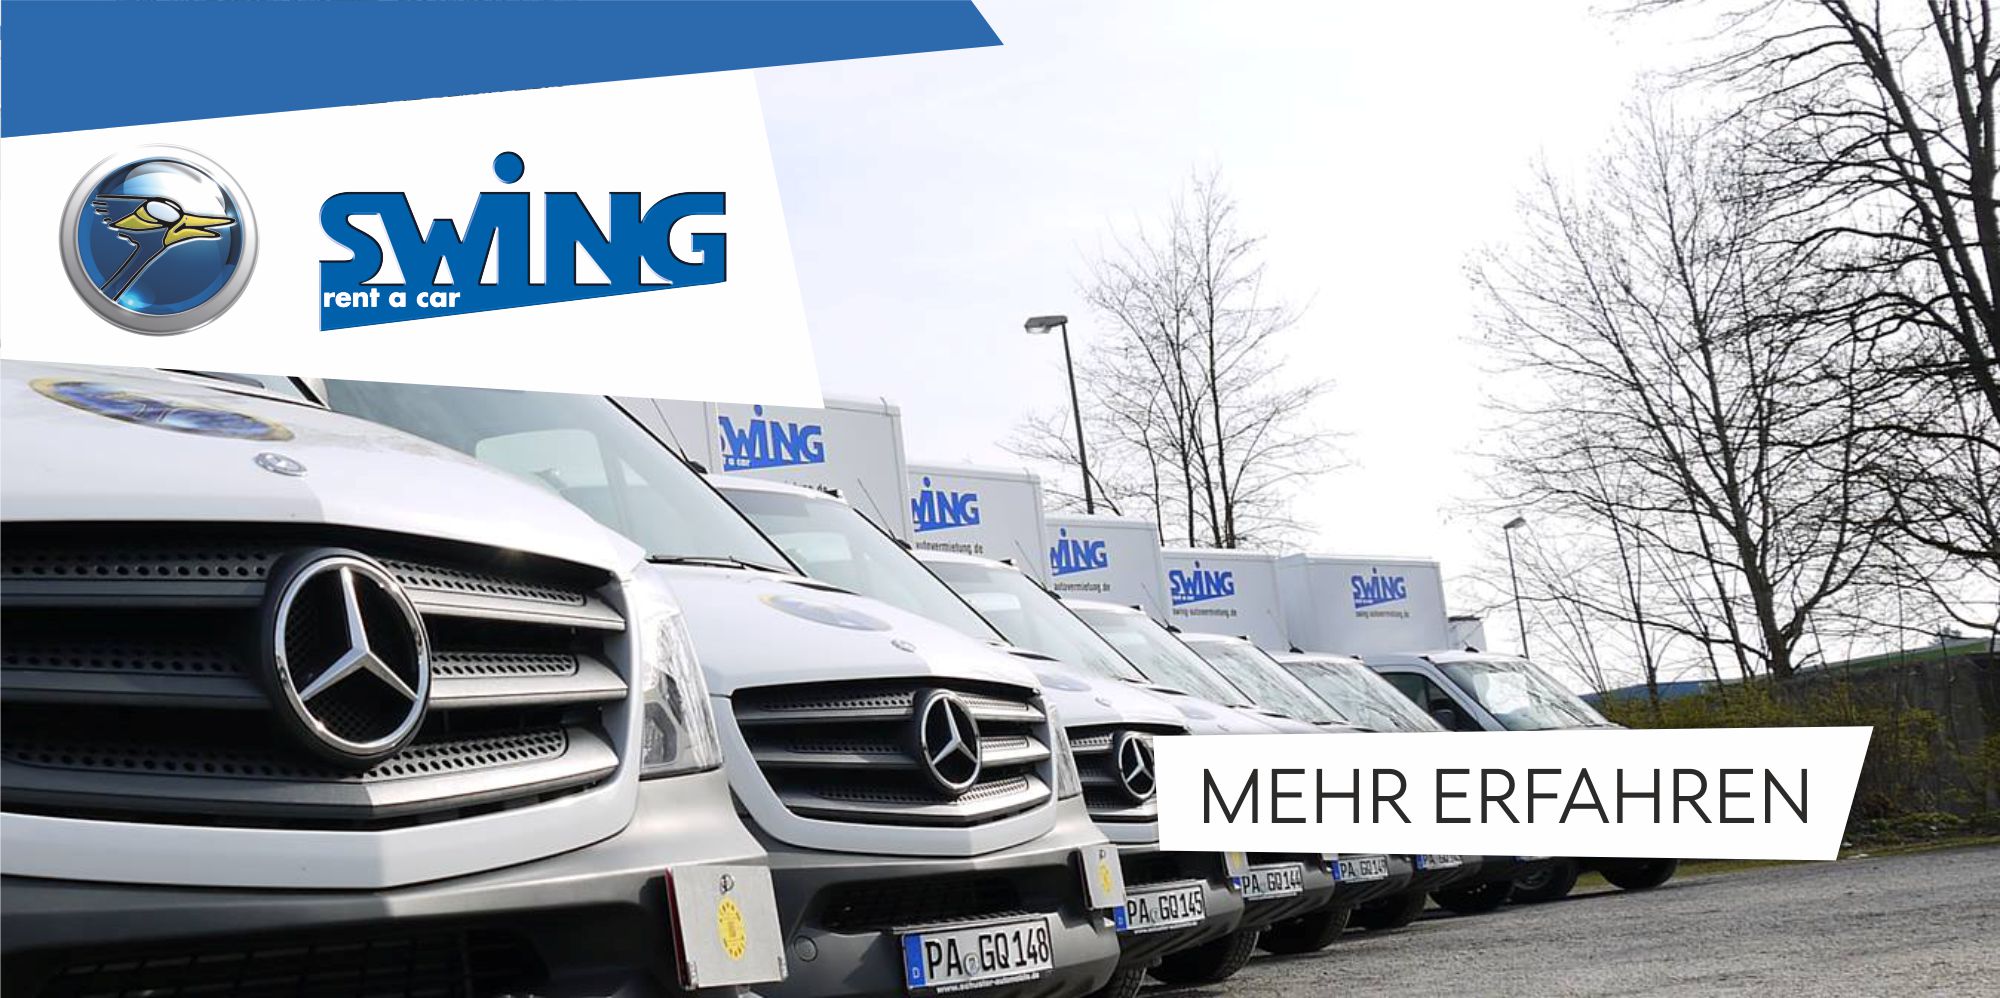 Aktionen | Schuster Gruppe - Schuster Automobile - Autohaus Ringler - Swing Autovermietung - Passau, Pocking, Ruhstorf